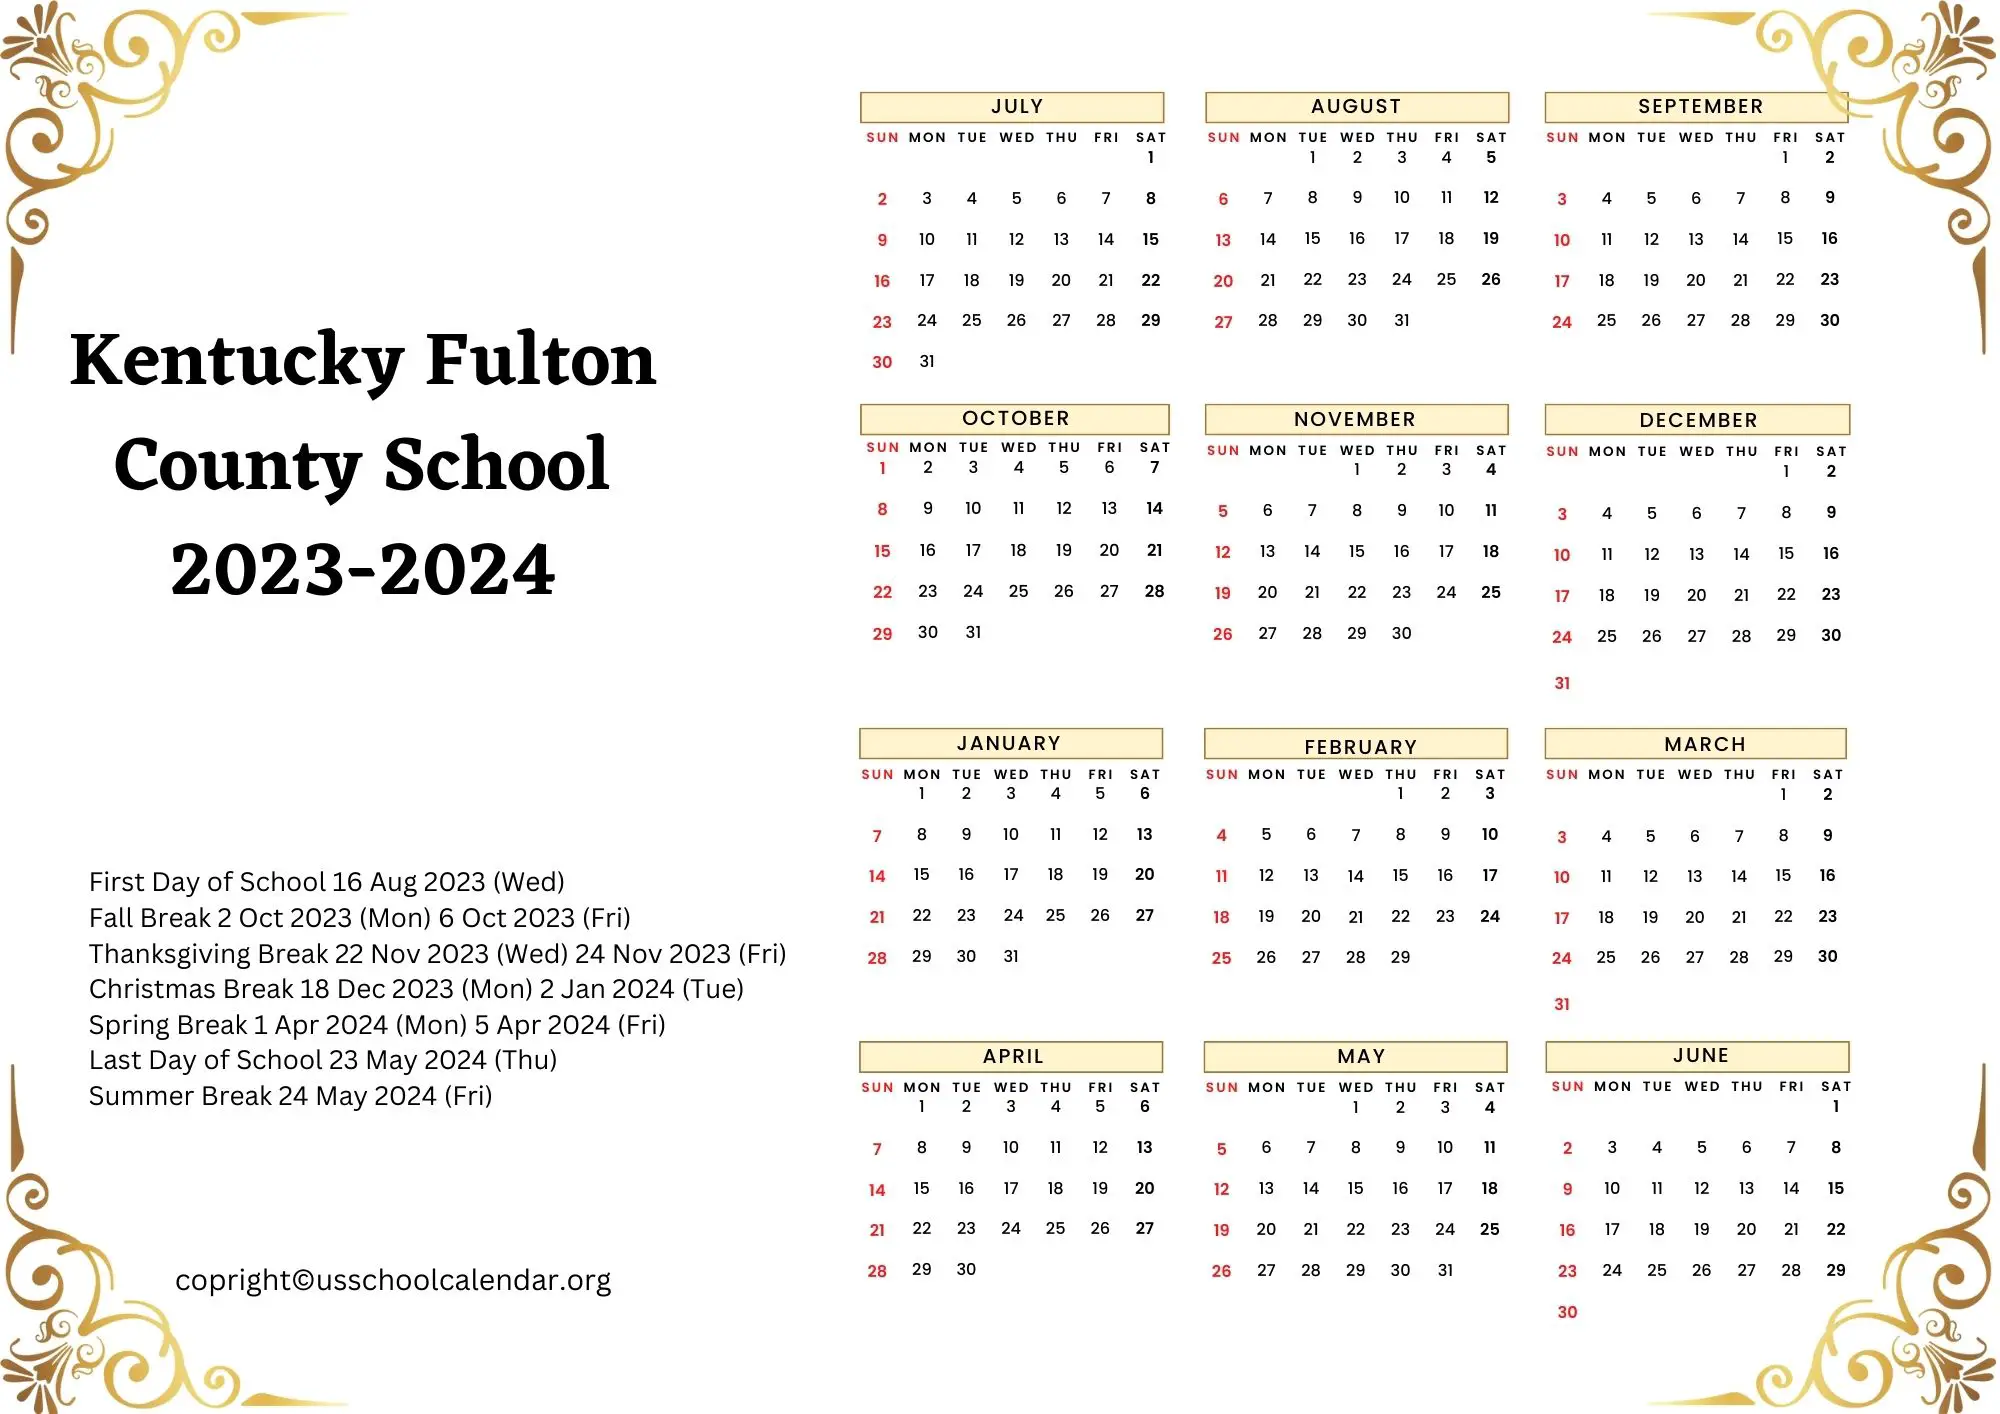 kentucky-fulton-county-school-calendar-with-holidays-2023-2024